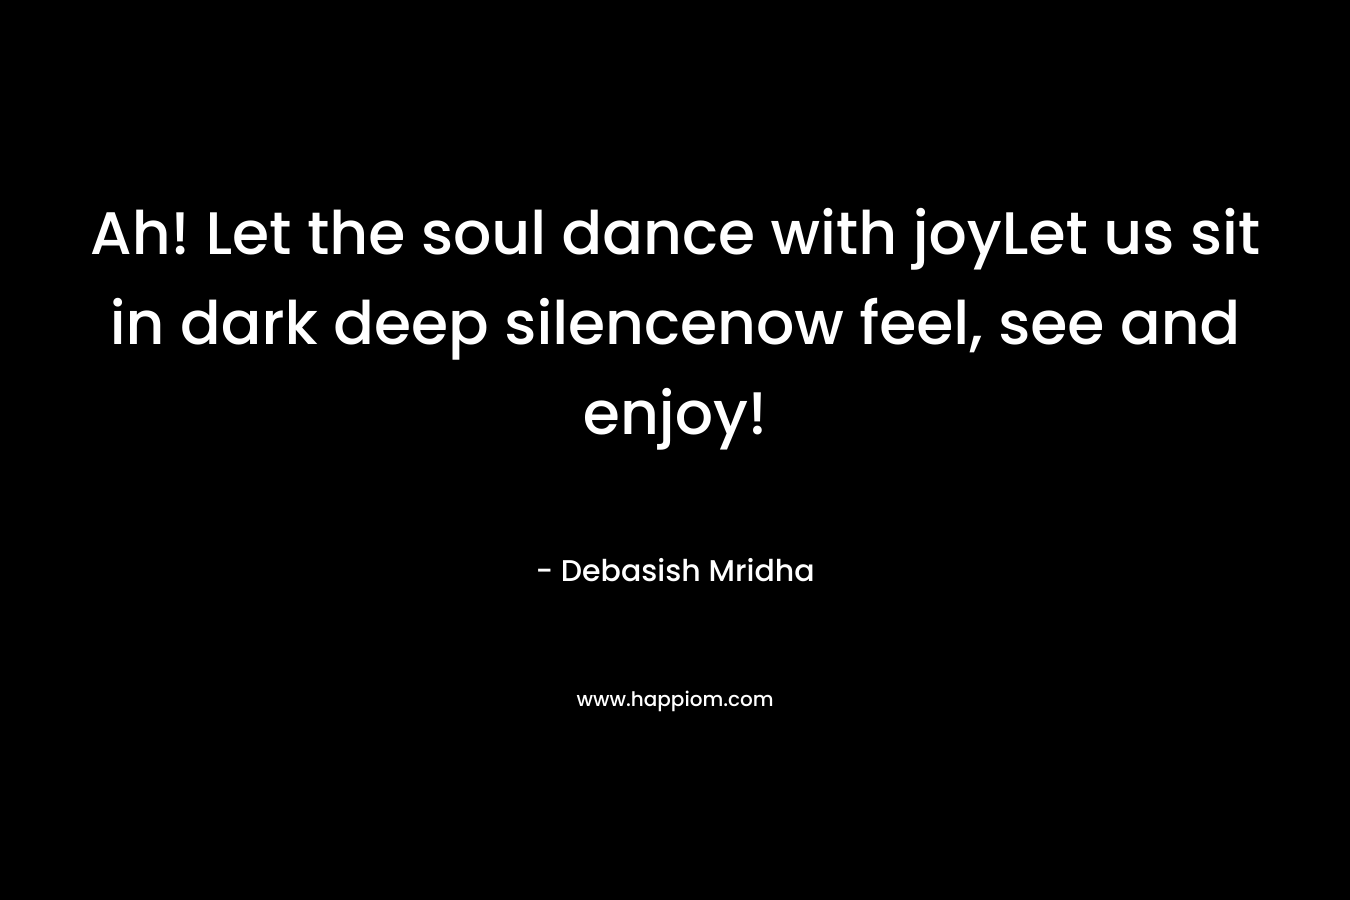 Ah! Let the soul dance with joyLet us sit in dark deep silencenow feel, see and enjoy! – Debasish Mridha